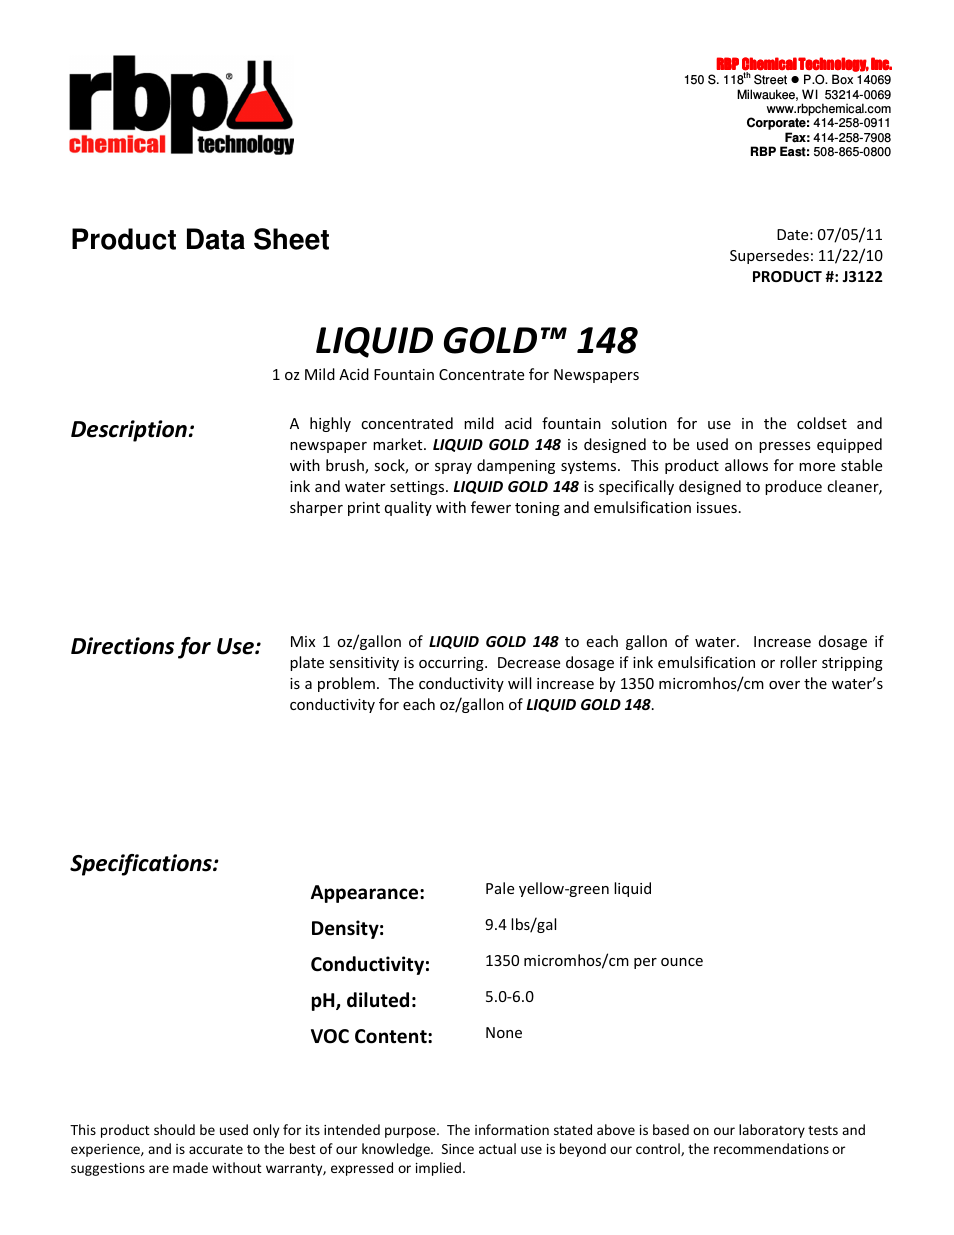 J3122 LIQUID GOLD 148